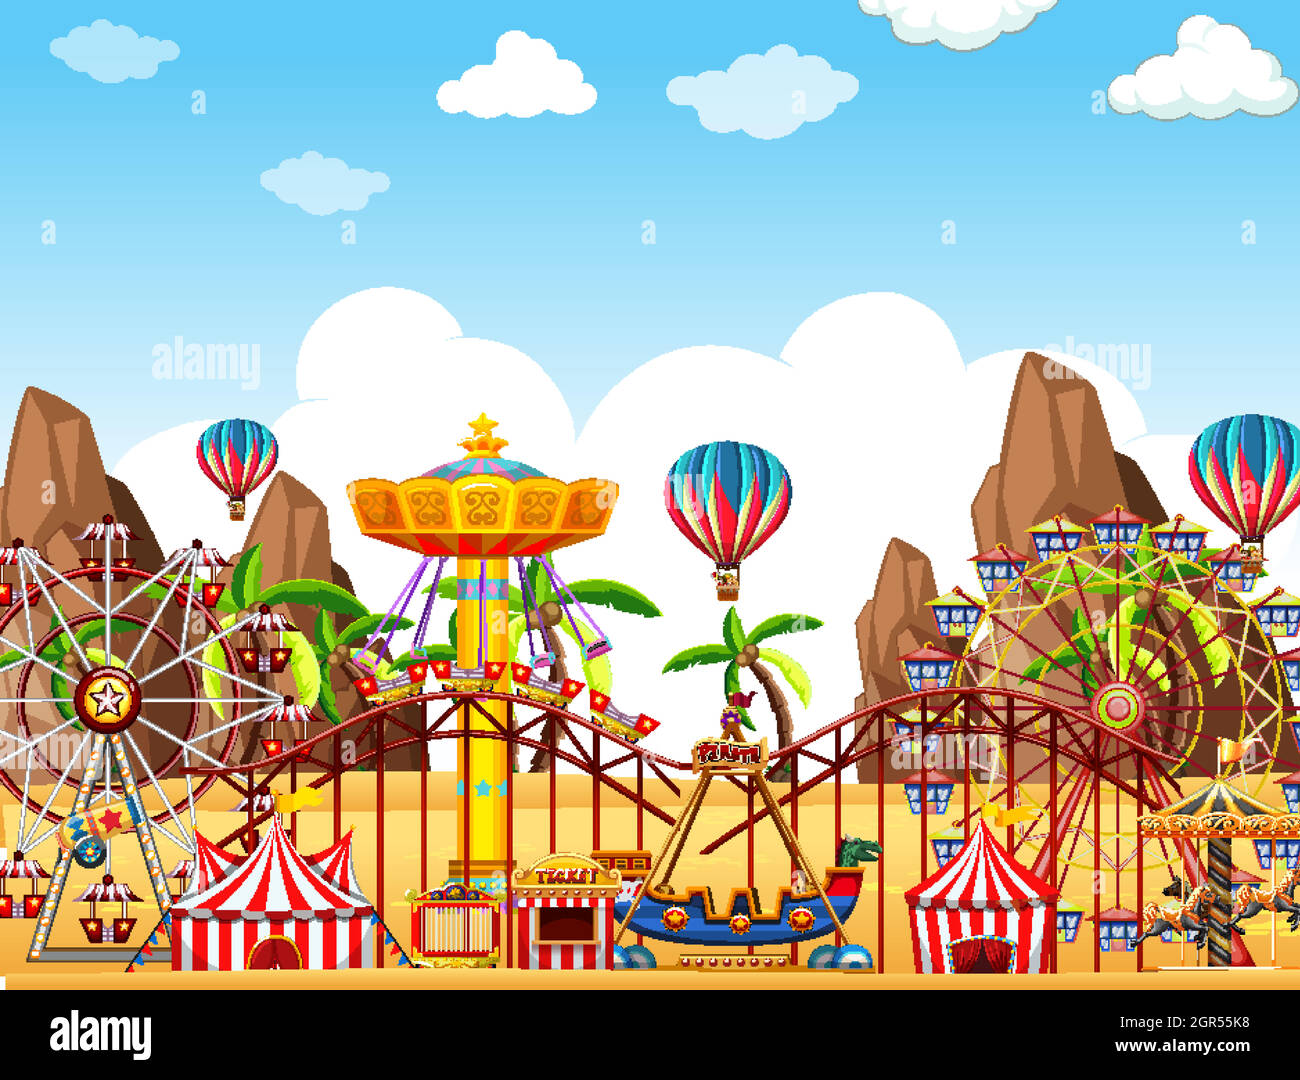 Themepark scene with many rides on the desert ground Stock Vector